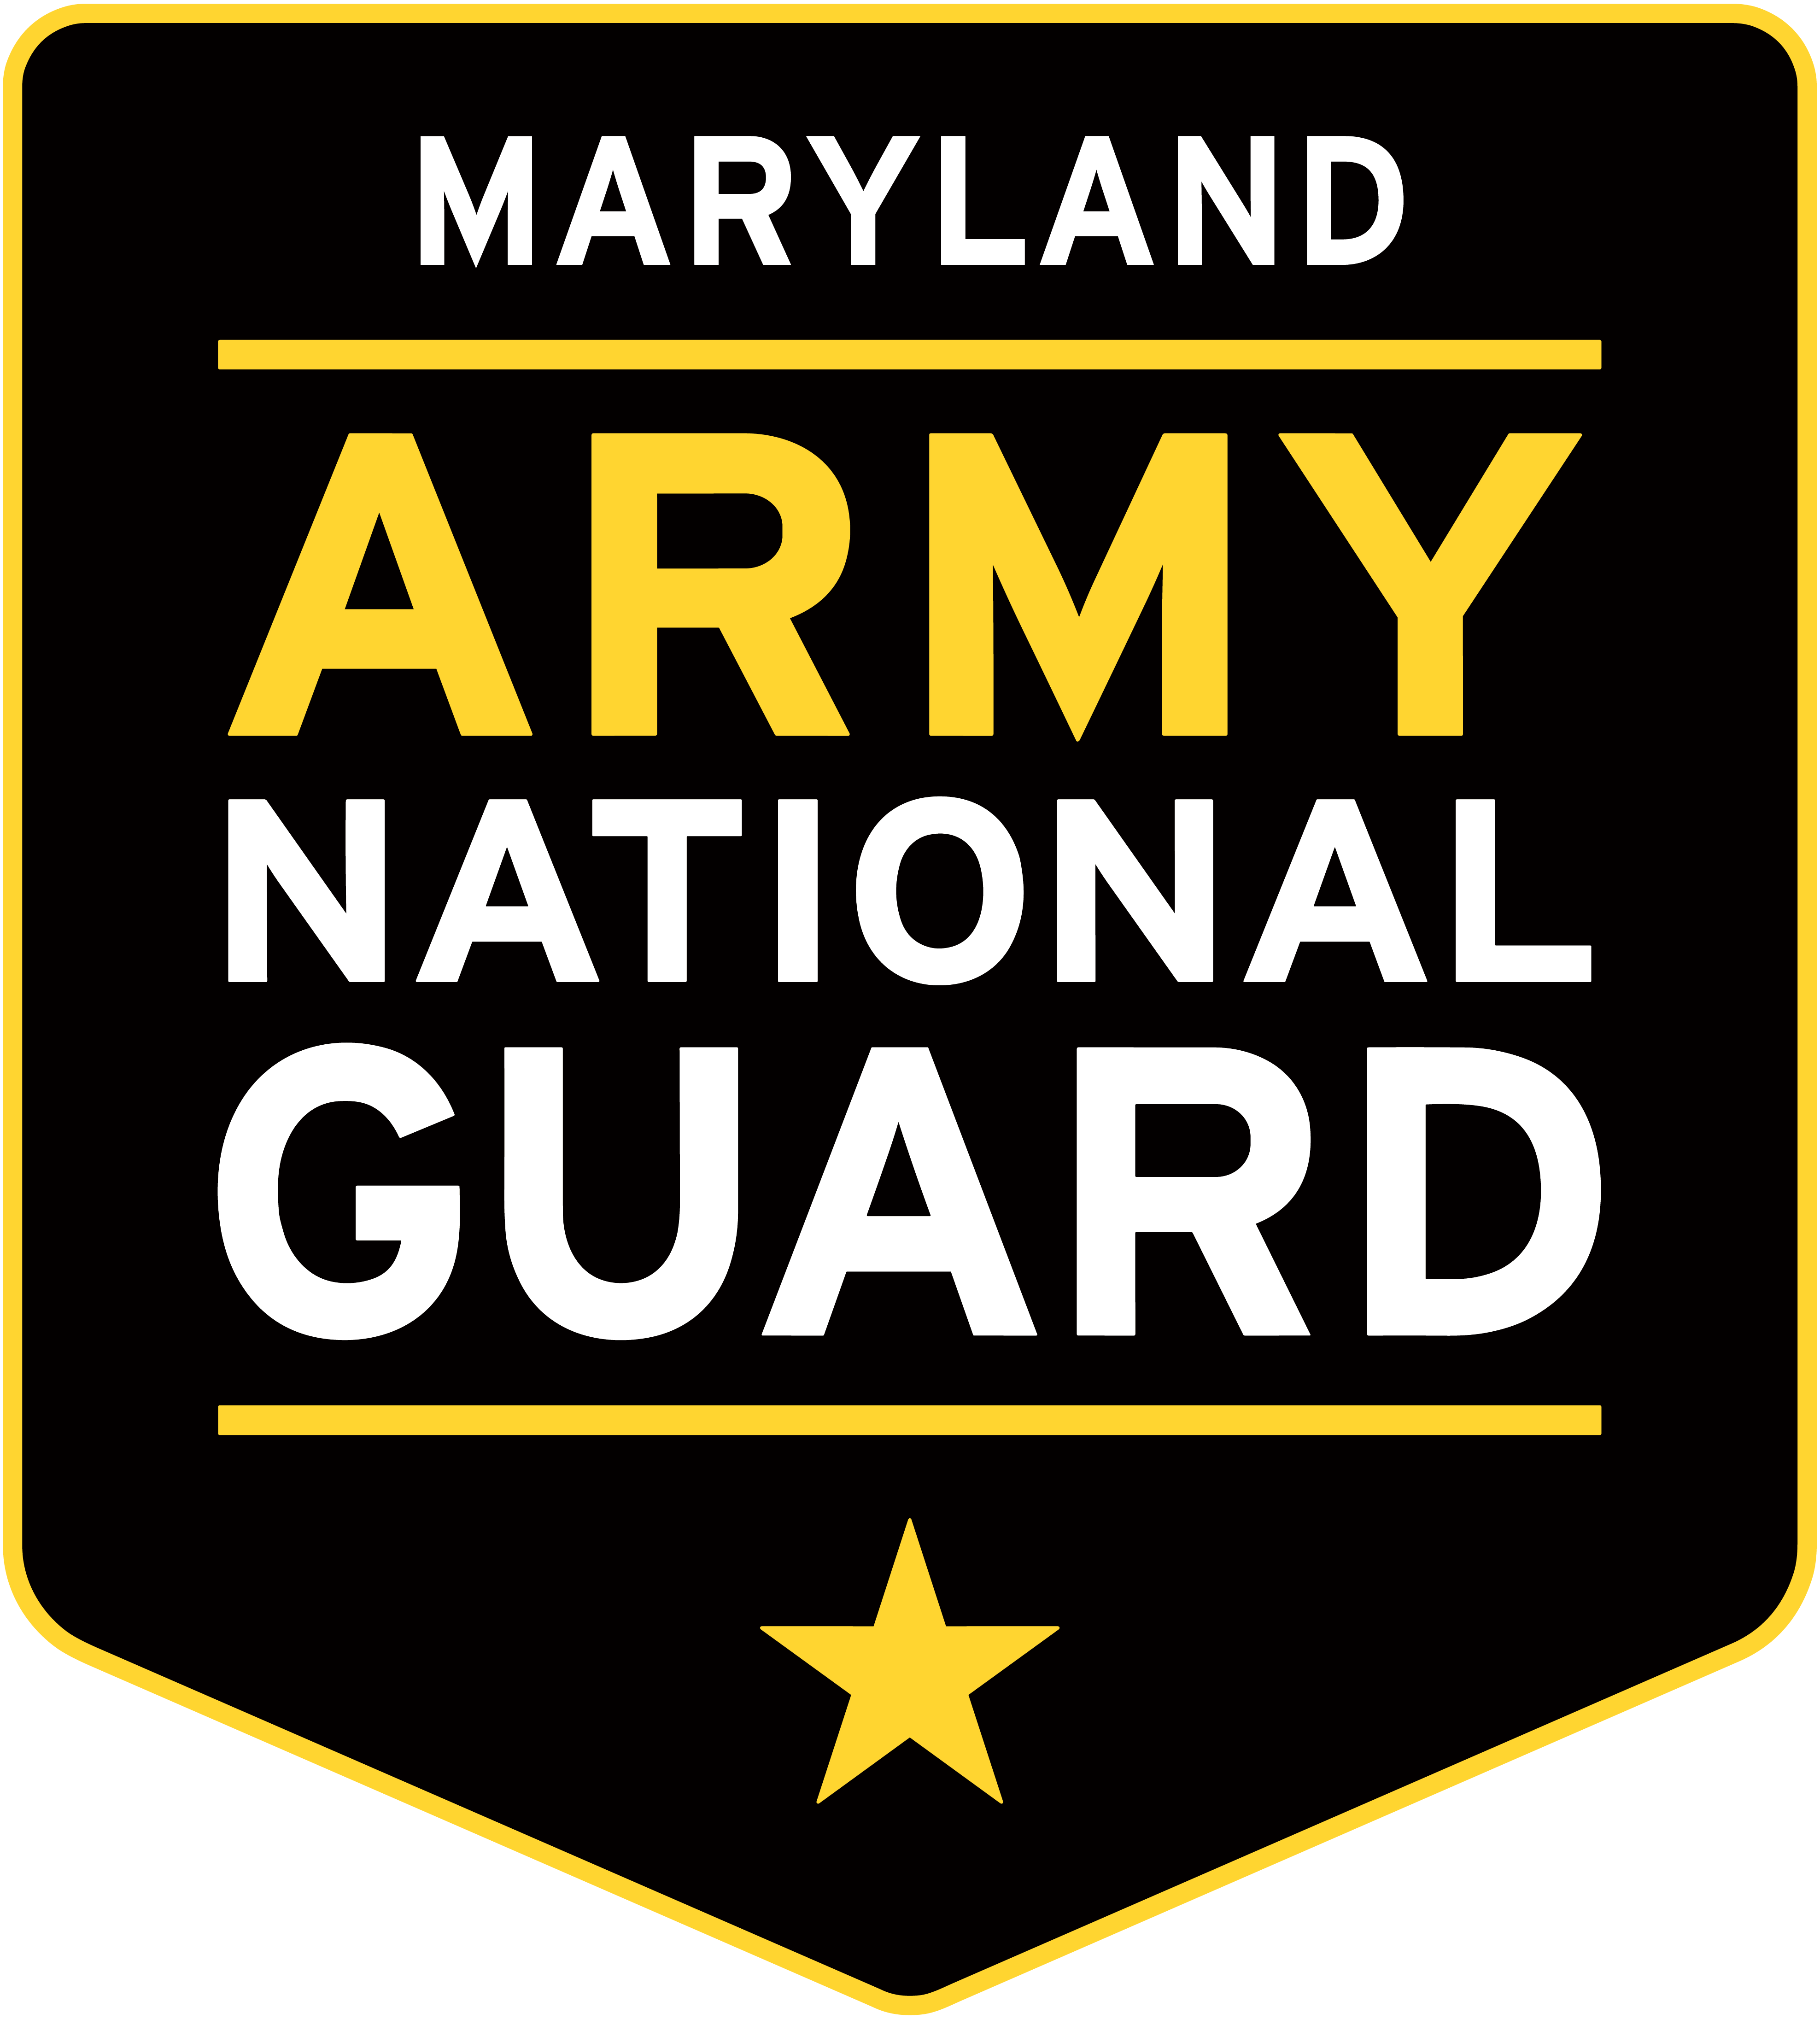 Maryland ARMY National Guard